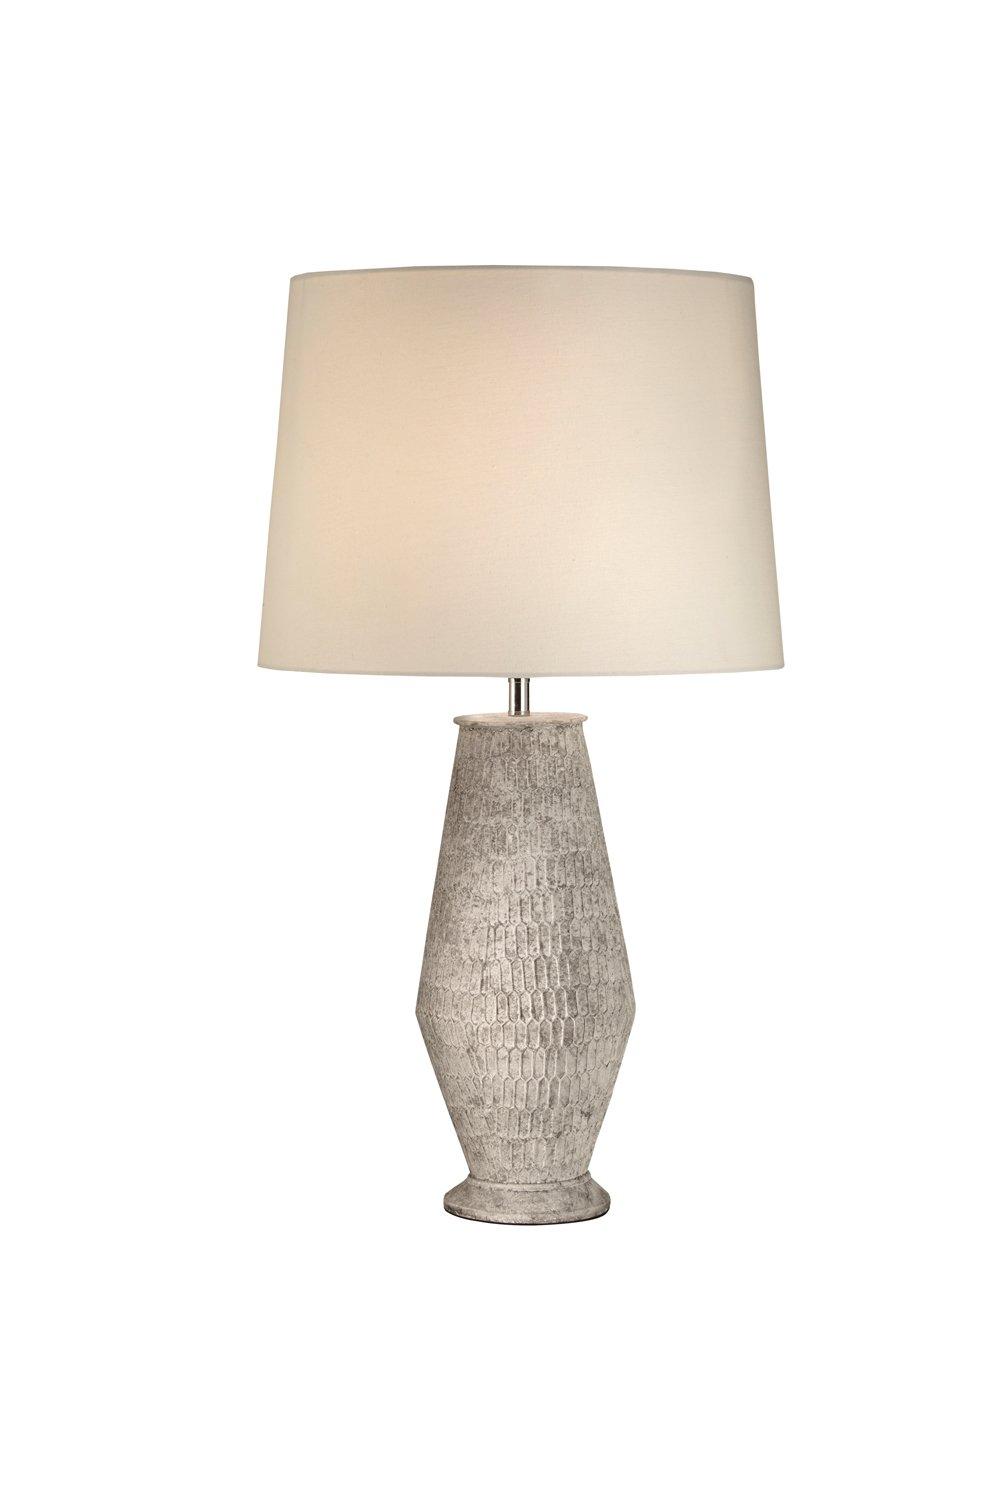 'Vamos' Table Lamp